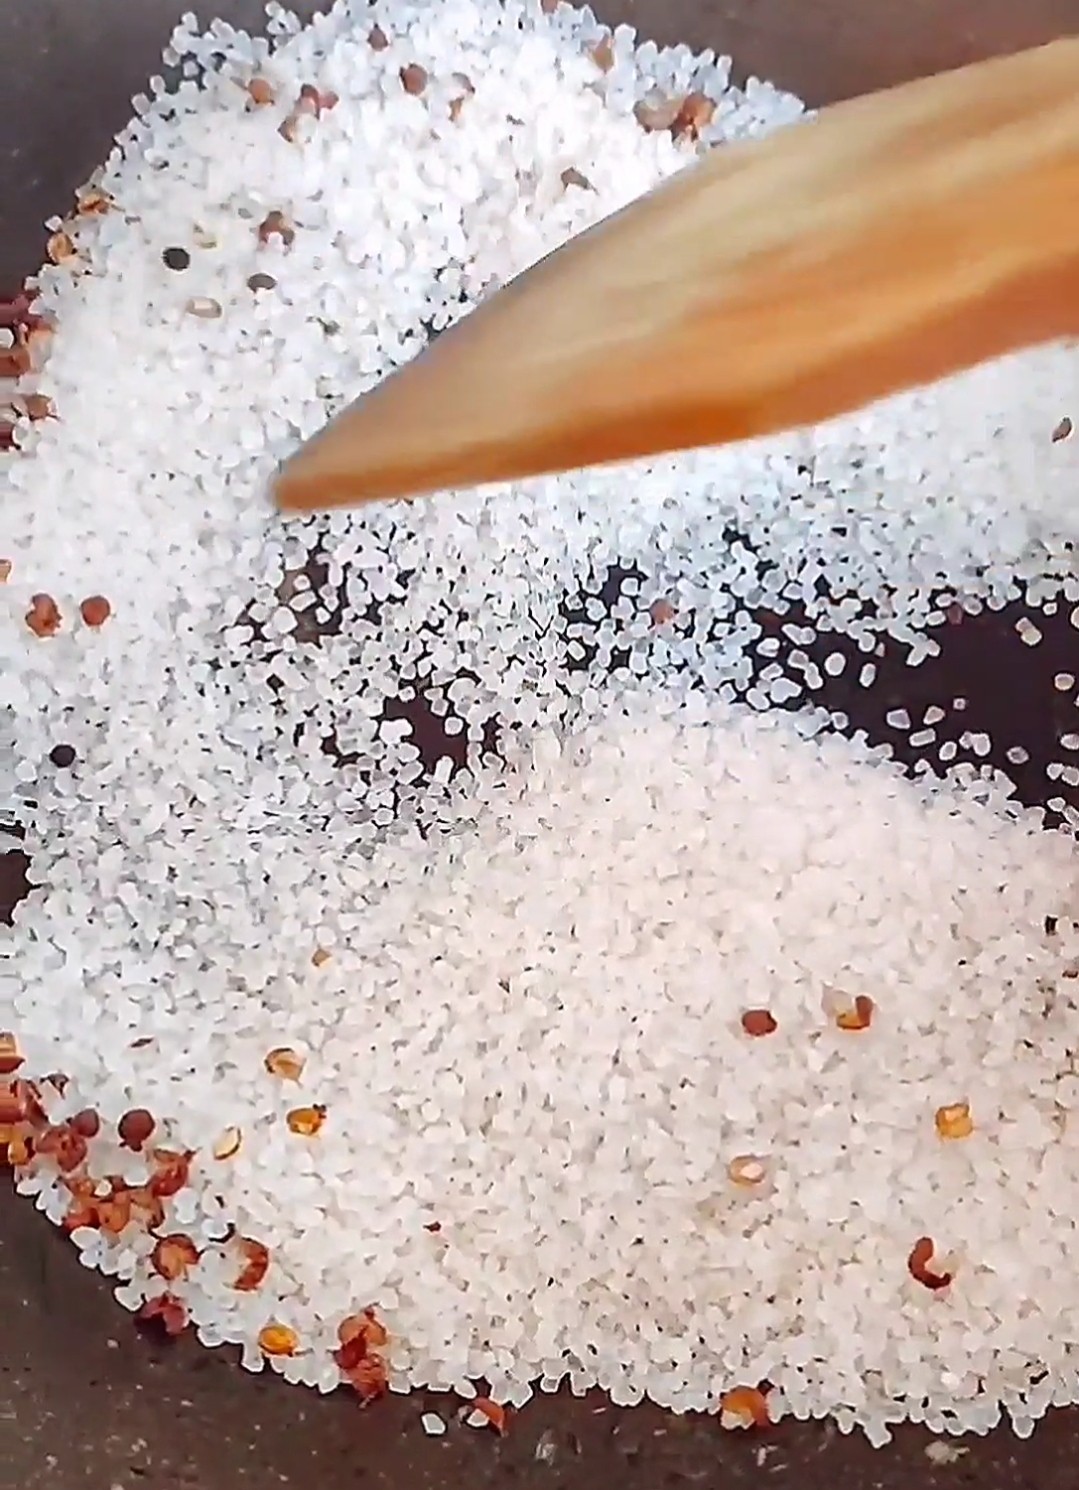 Salt Baked Shrimp recipe